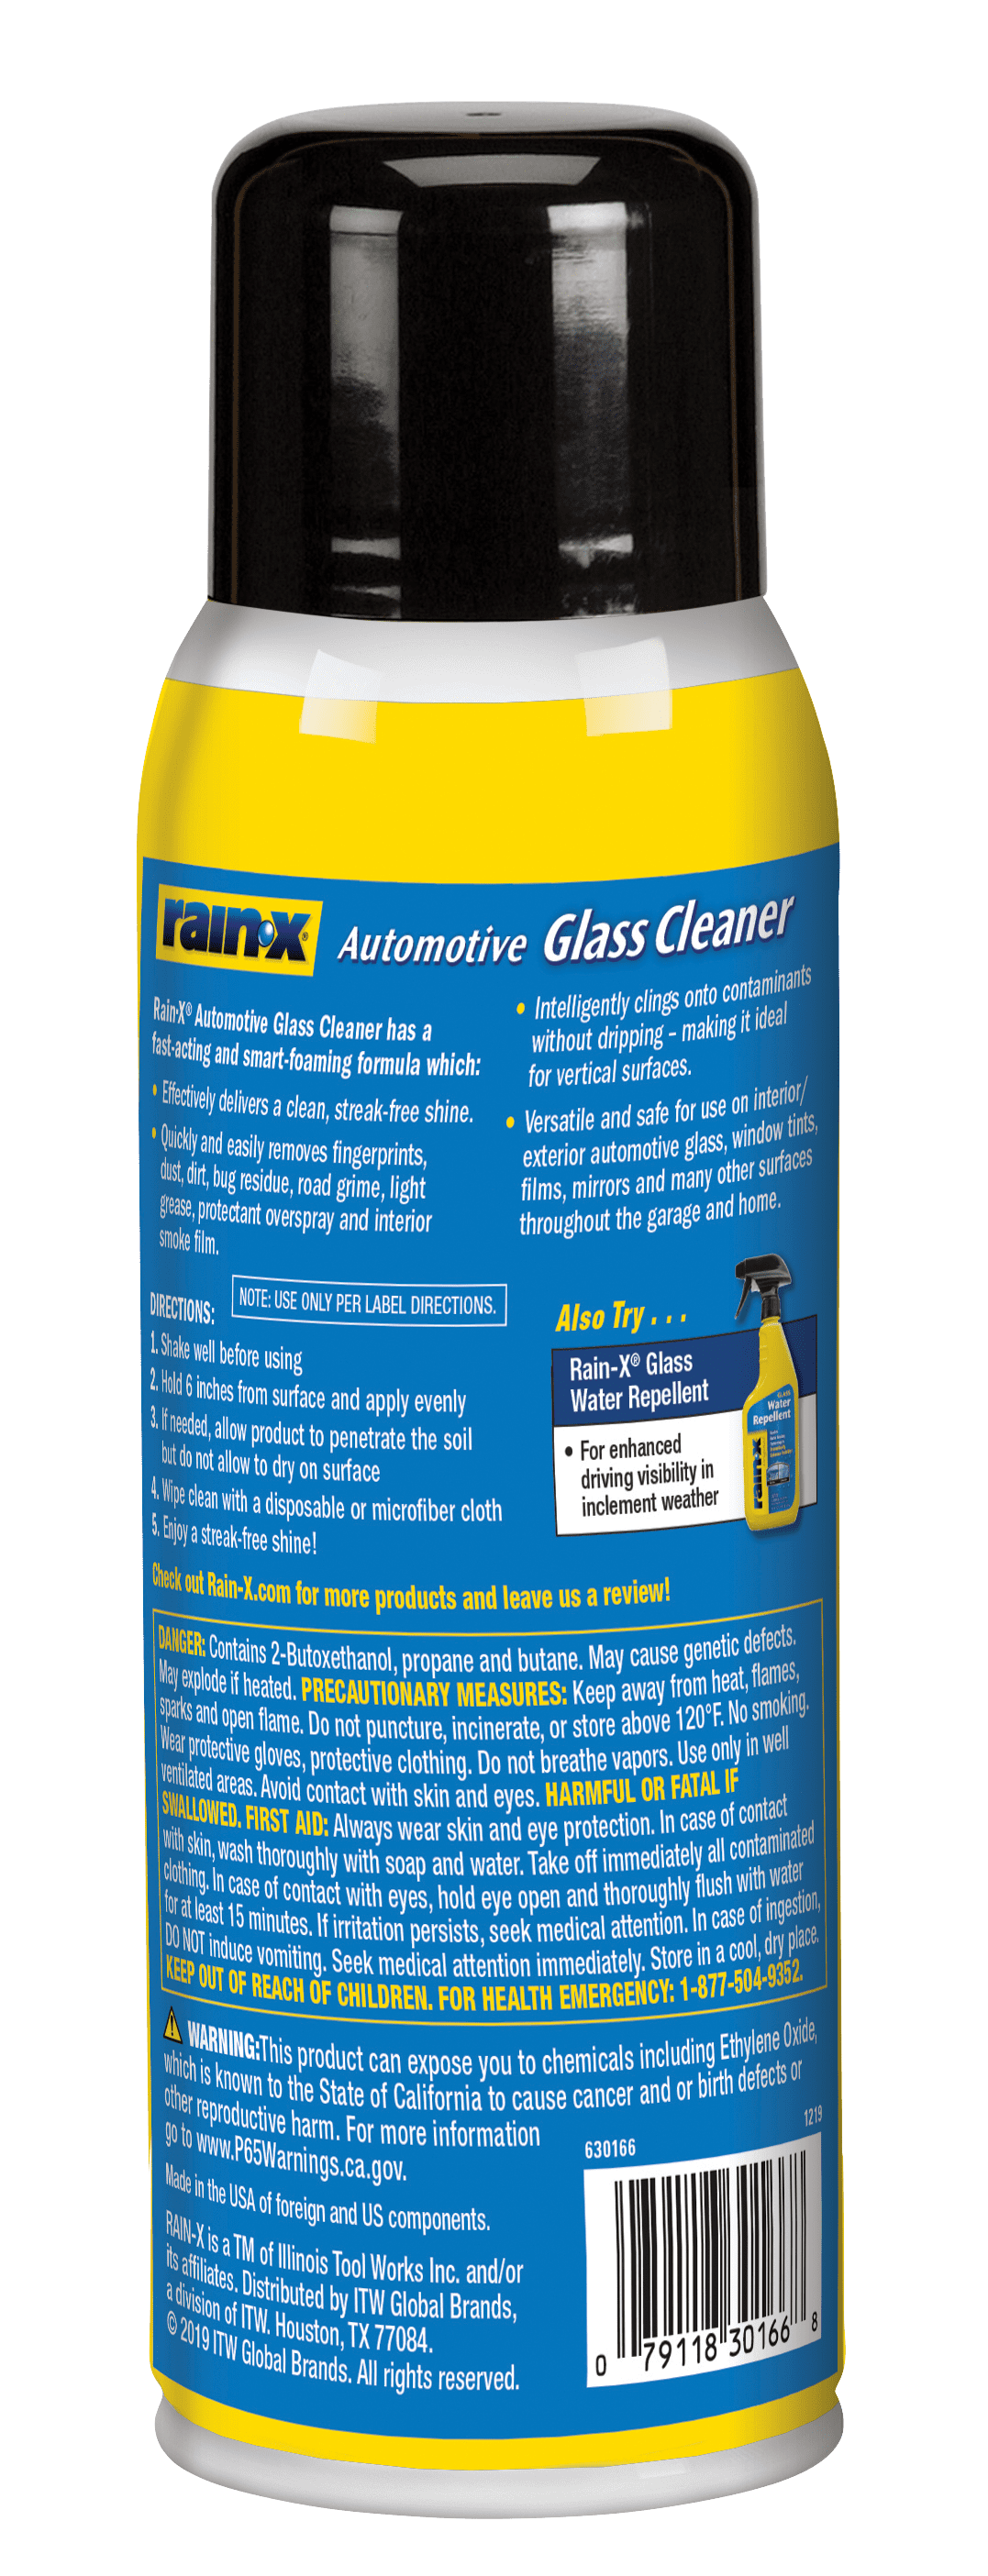 Rain-x X-treme Clean Clear Surface Cleaner 12 oz. Bottle - 5080217W 